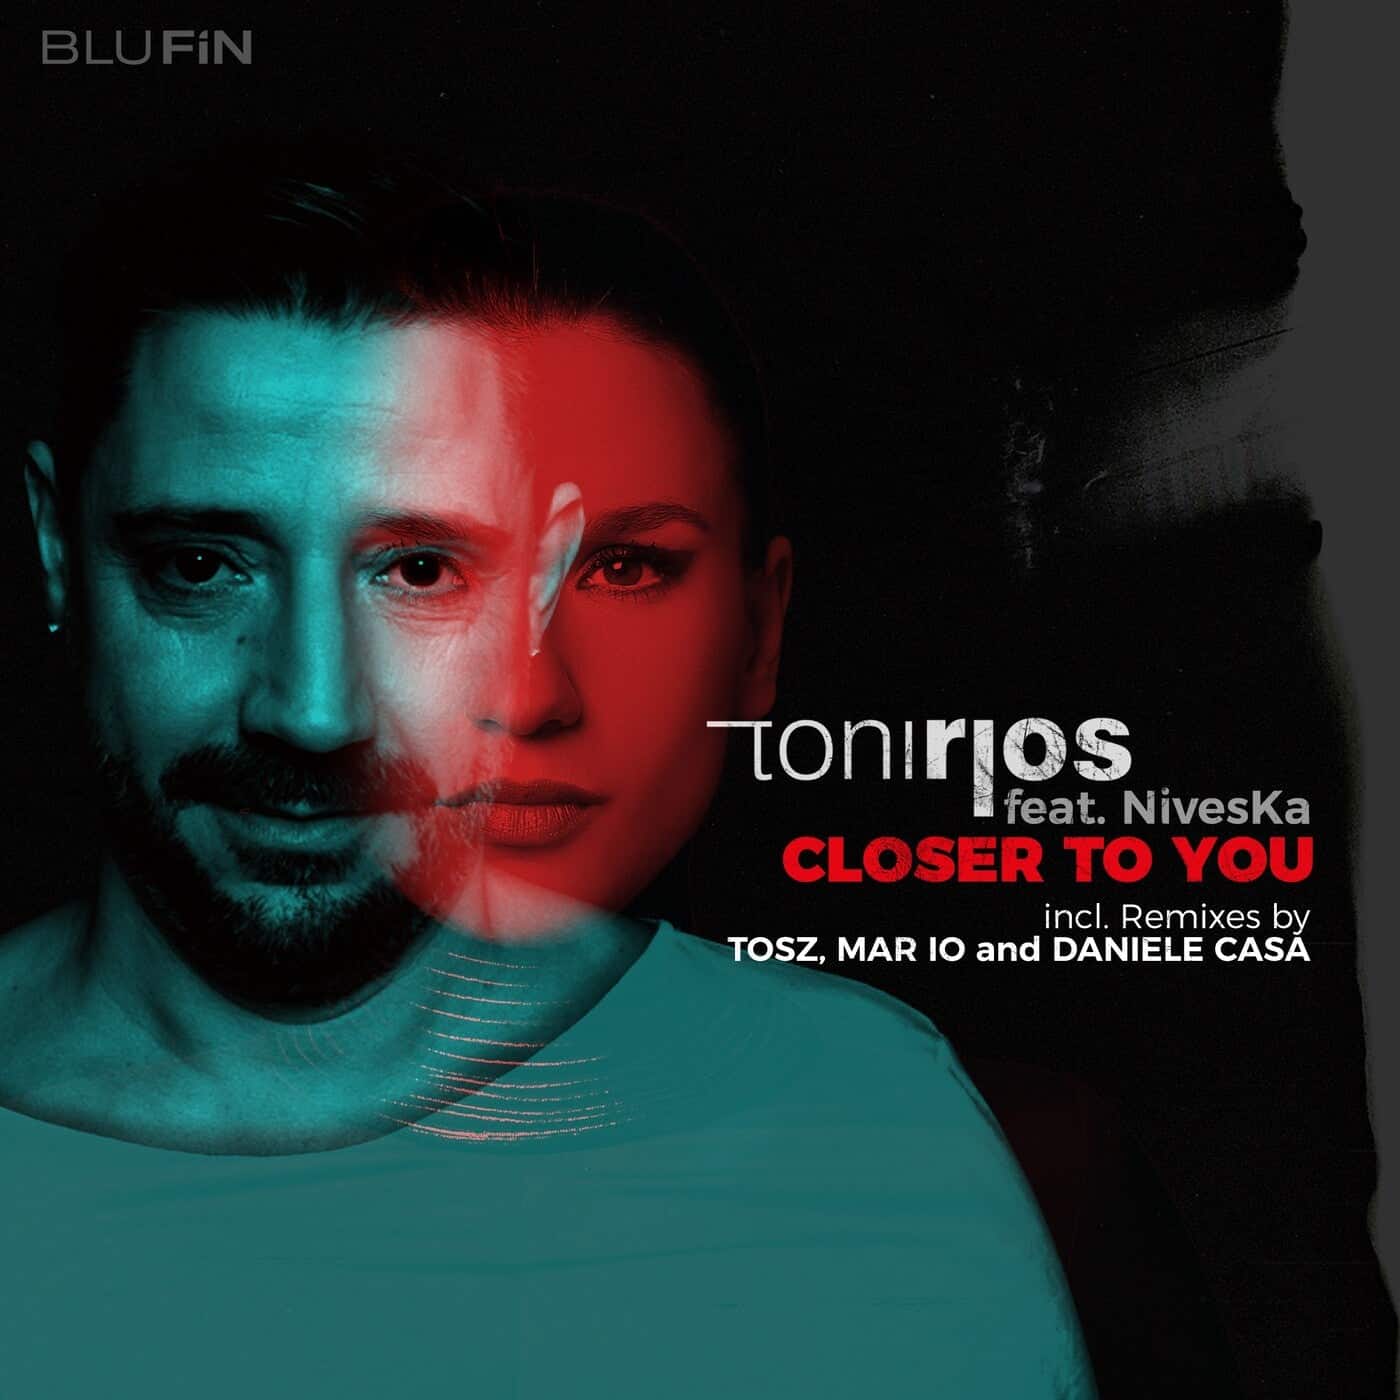 image cover: Toni Rios, NivesKa - Closer to You / BF351